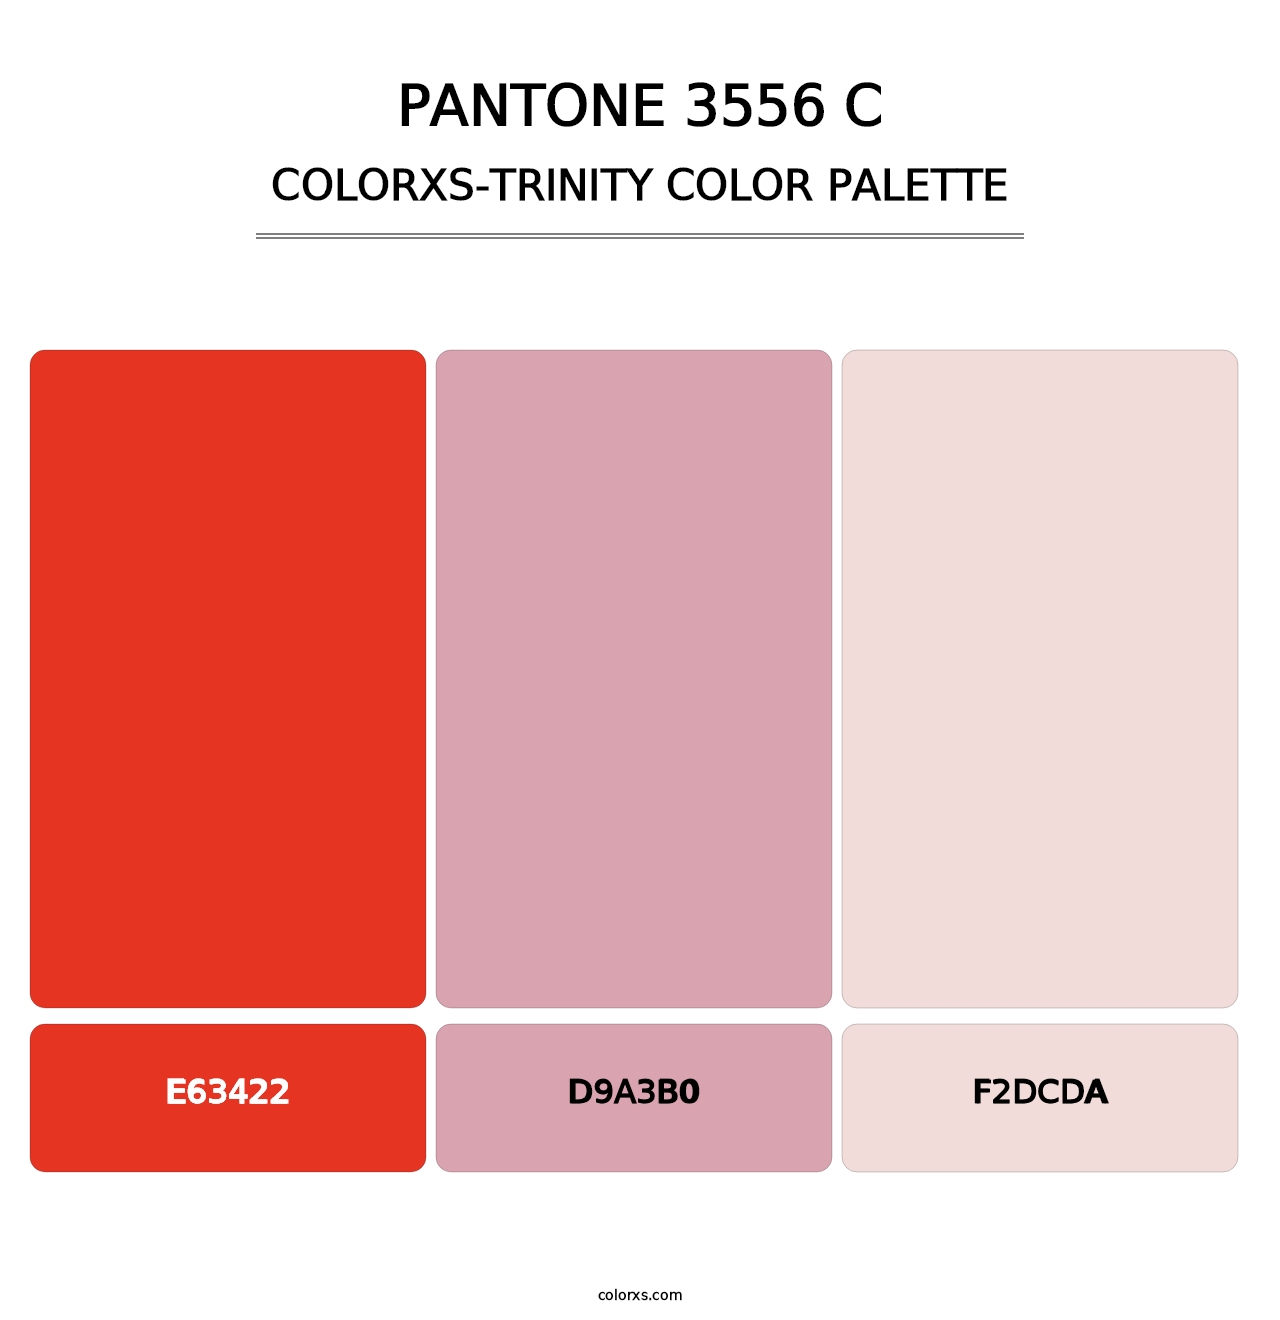 PANTONE 3556 C - Colorxs Trinity Palette